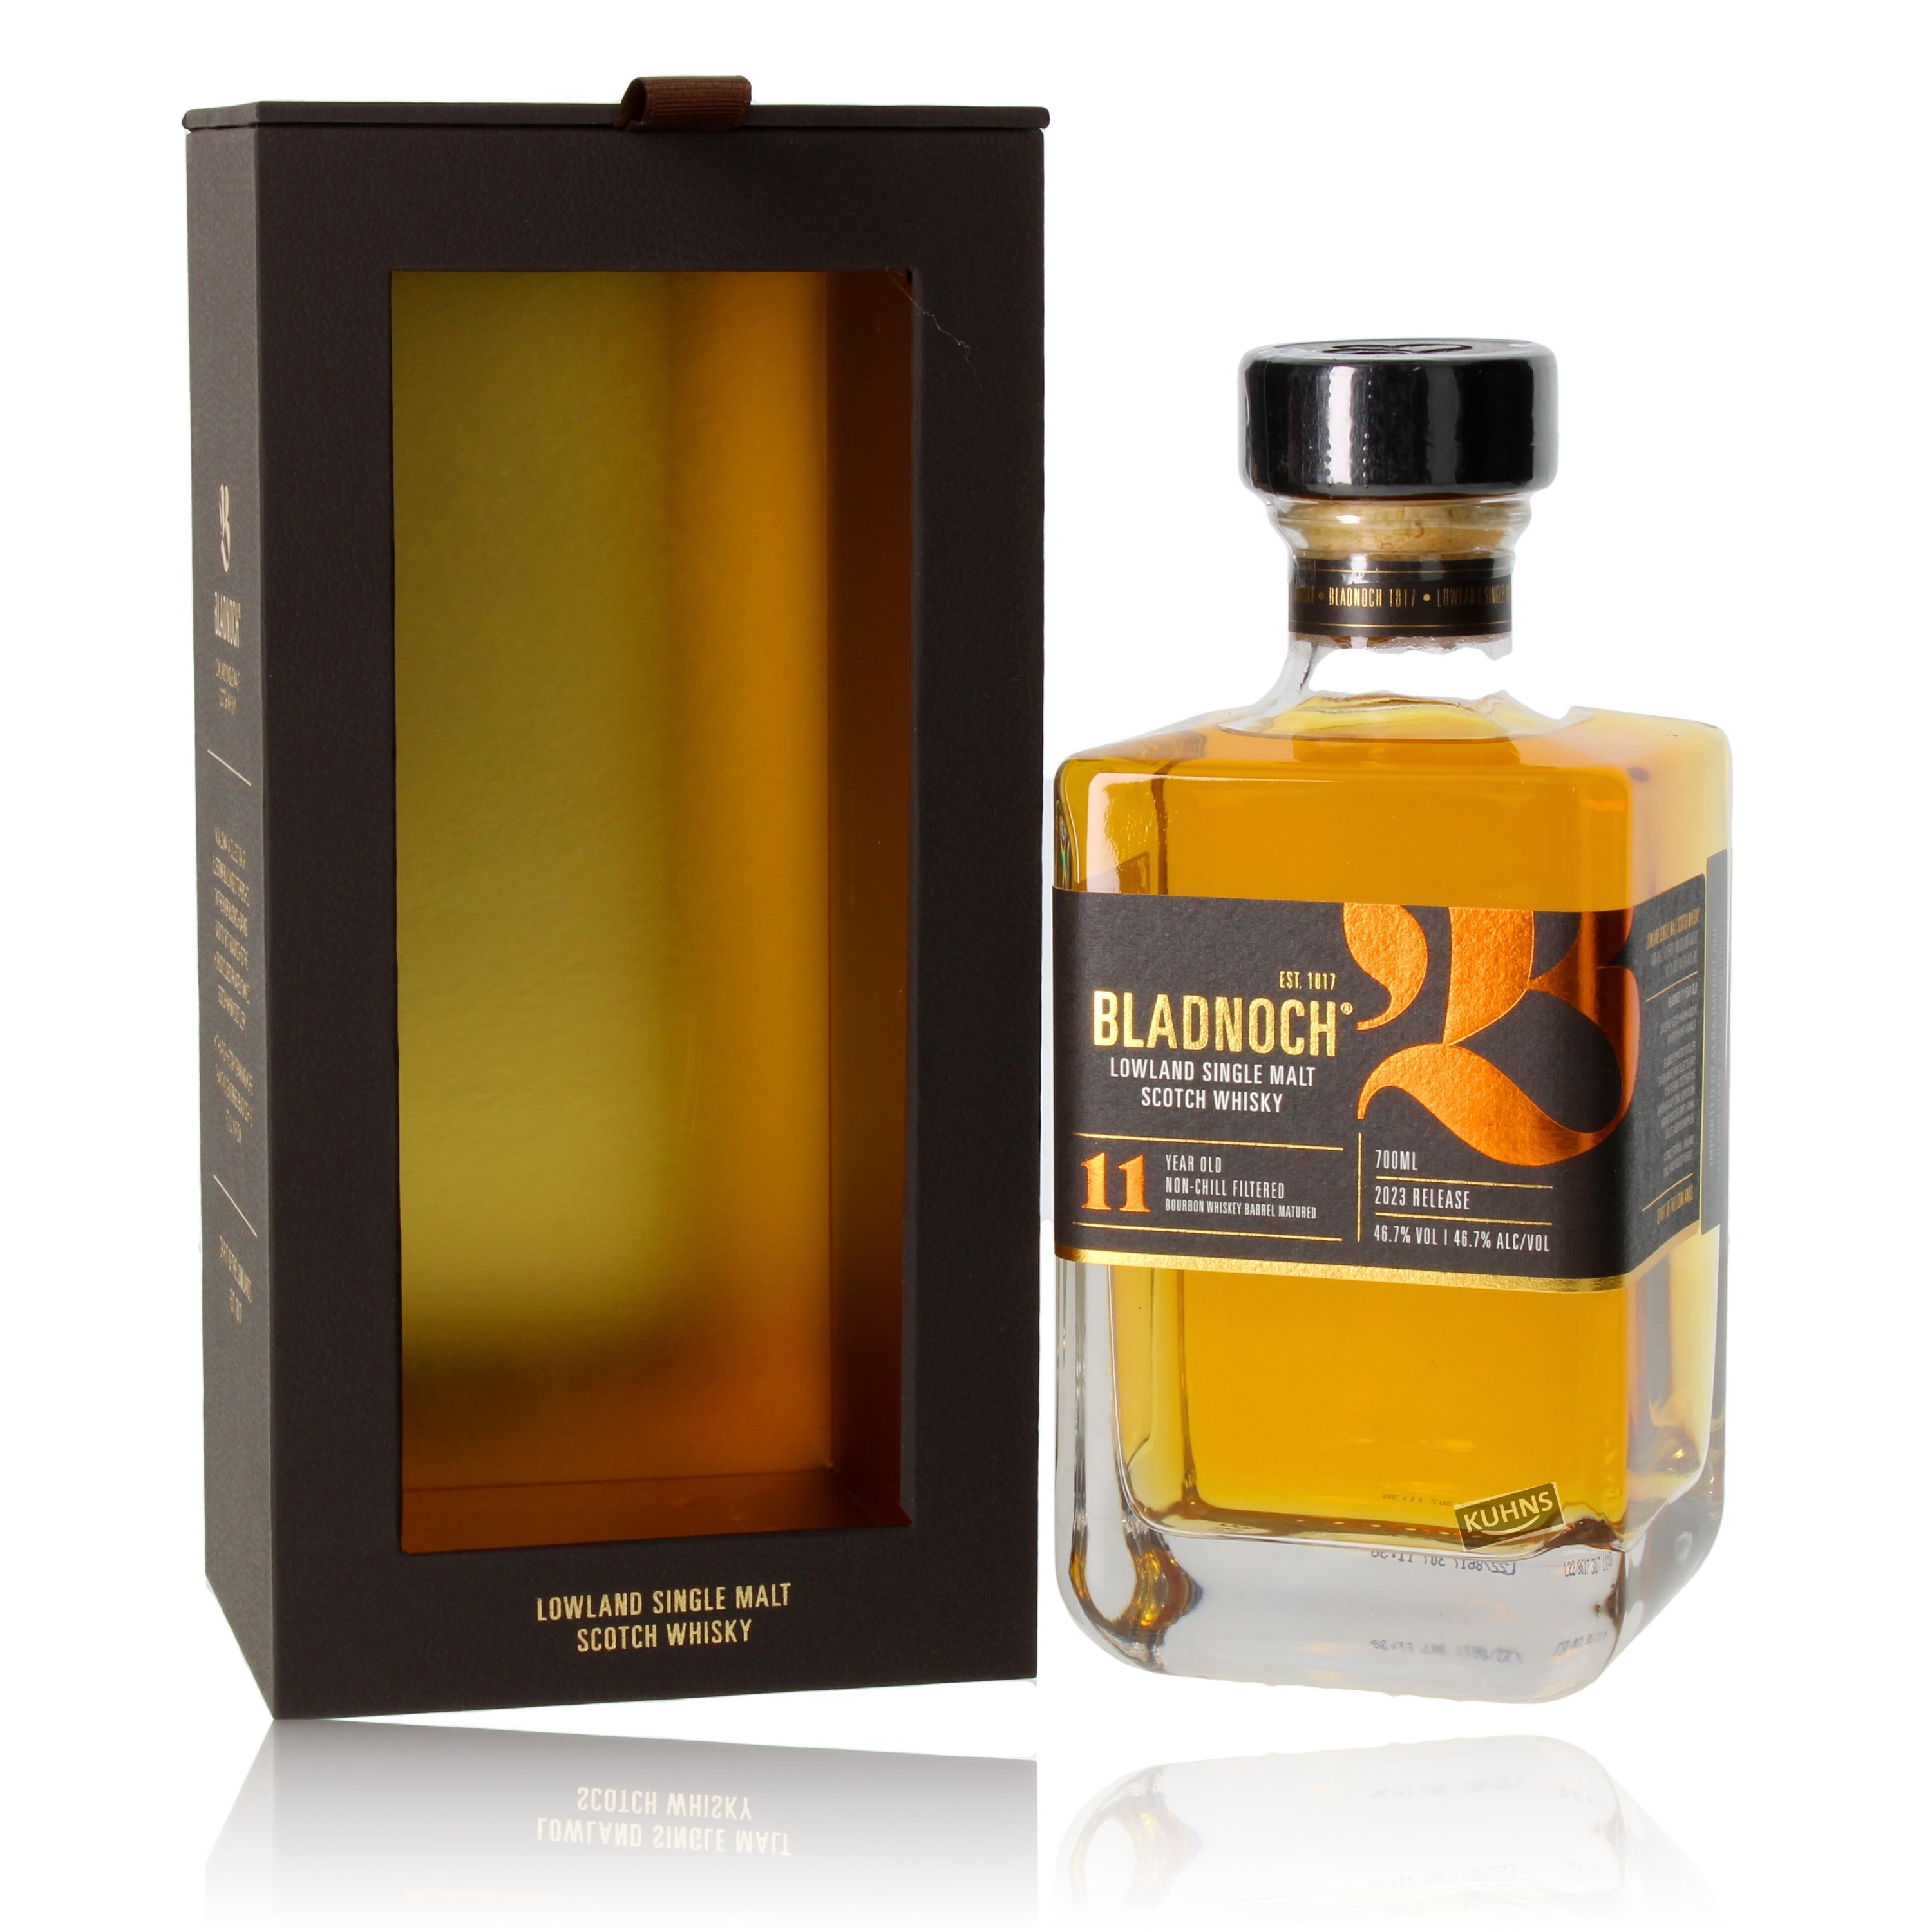 Bladnoch 11 Jahre Lowland Single Malt Scotch Whisky 0,7l, alc. 46,7 Vol.-%